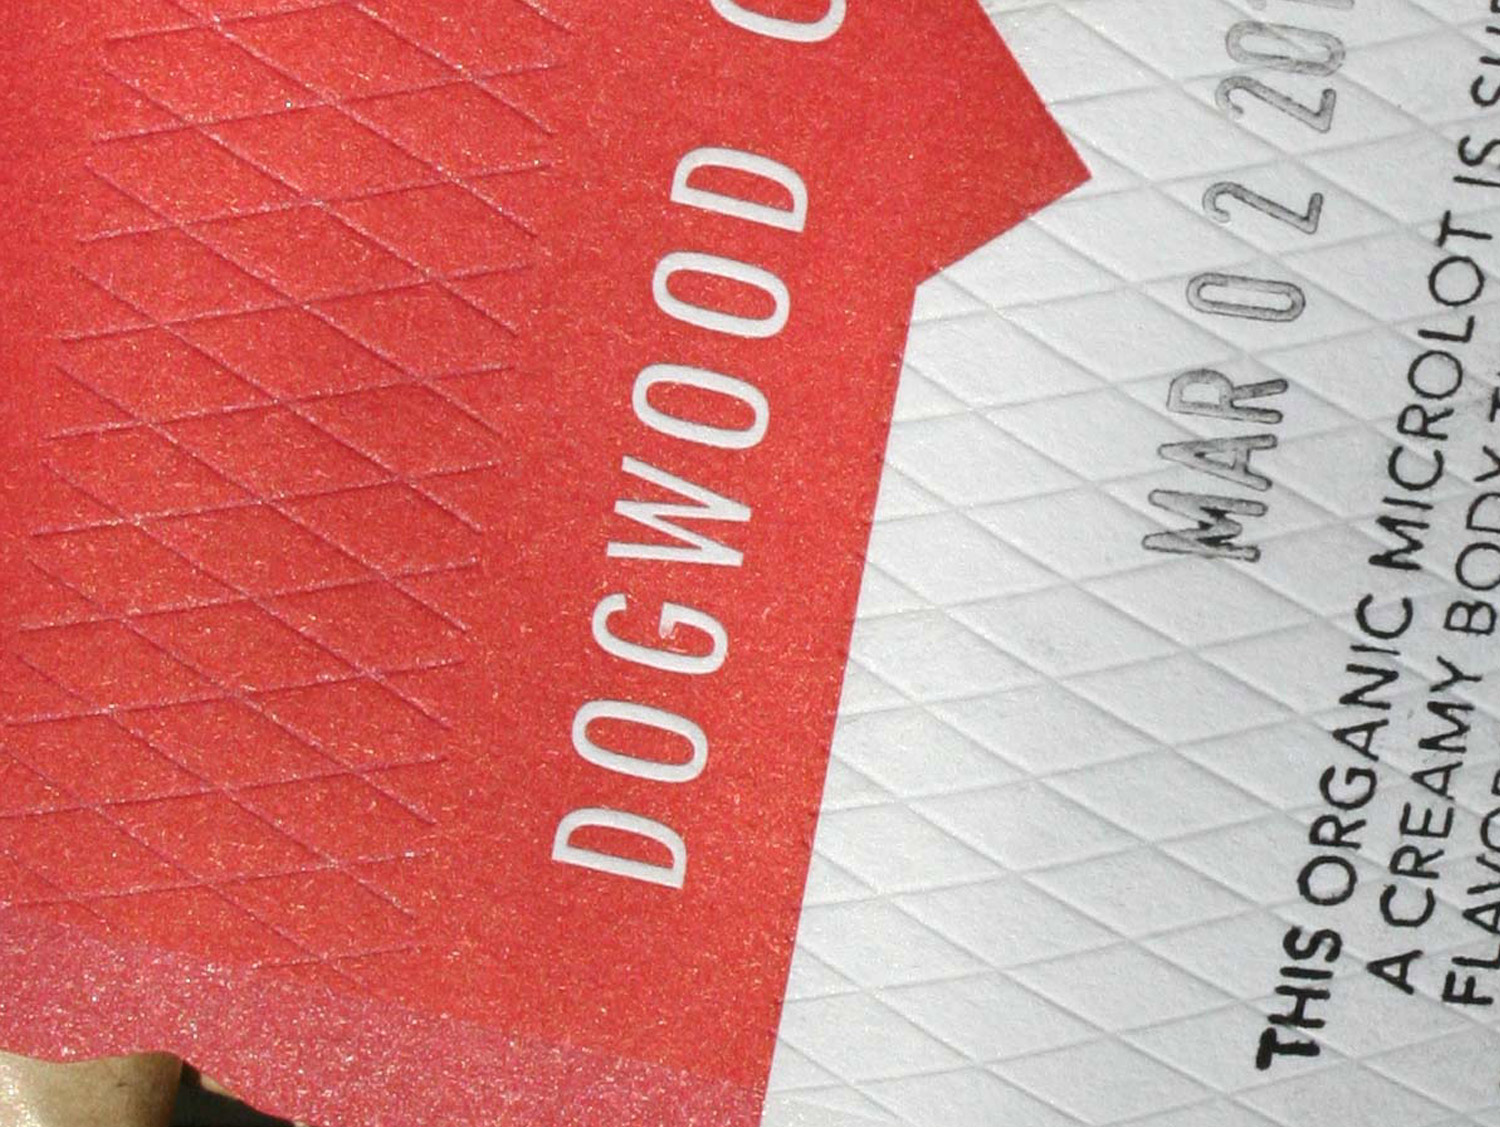 Dogwood-Coffee-Co-11-Packaging-06.jpg